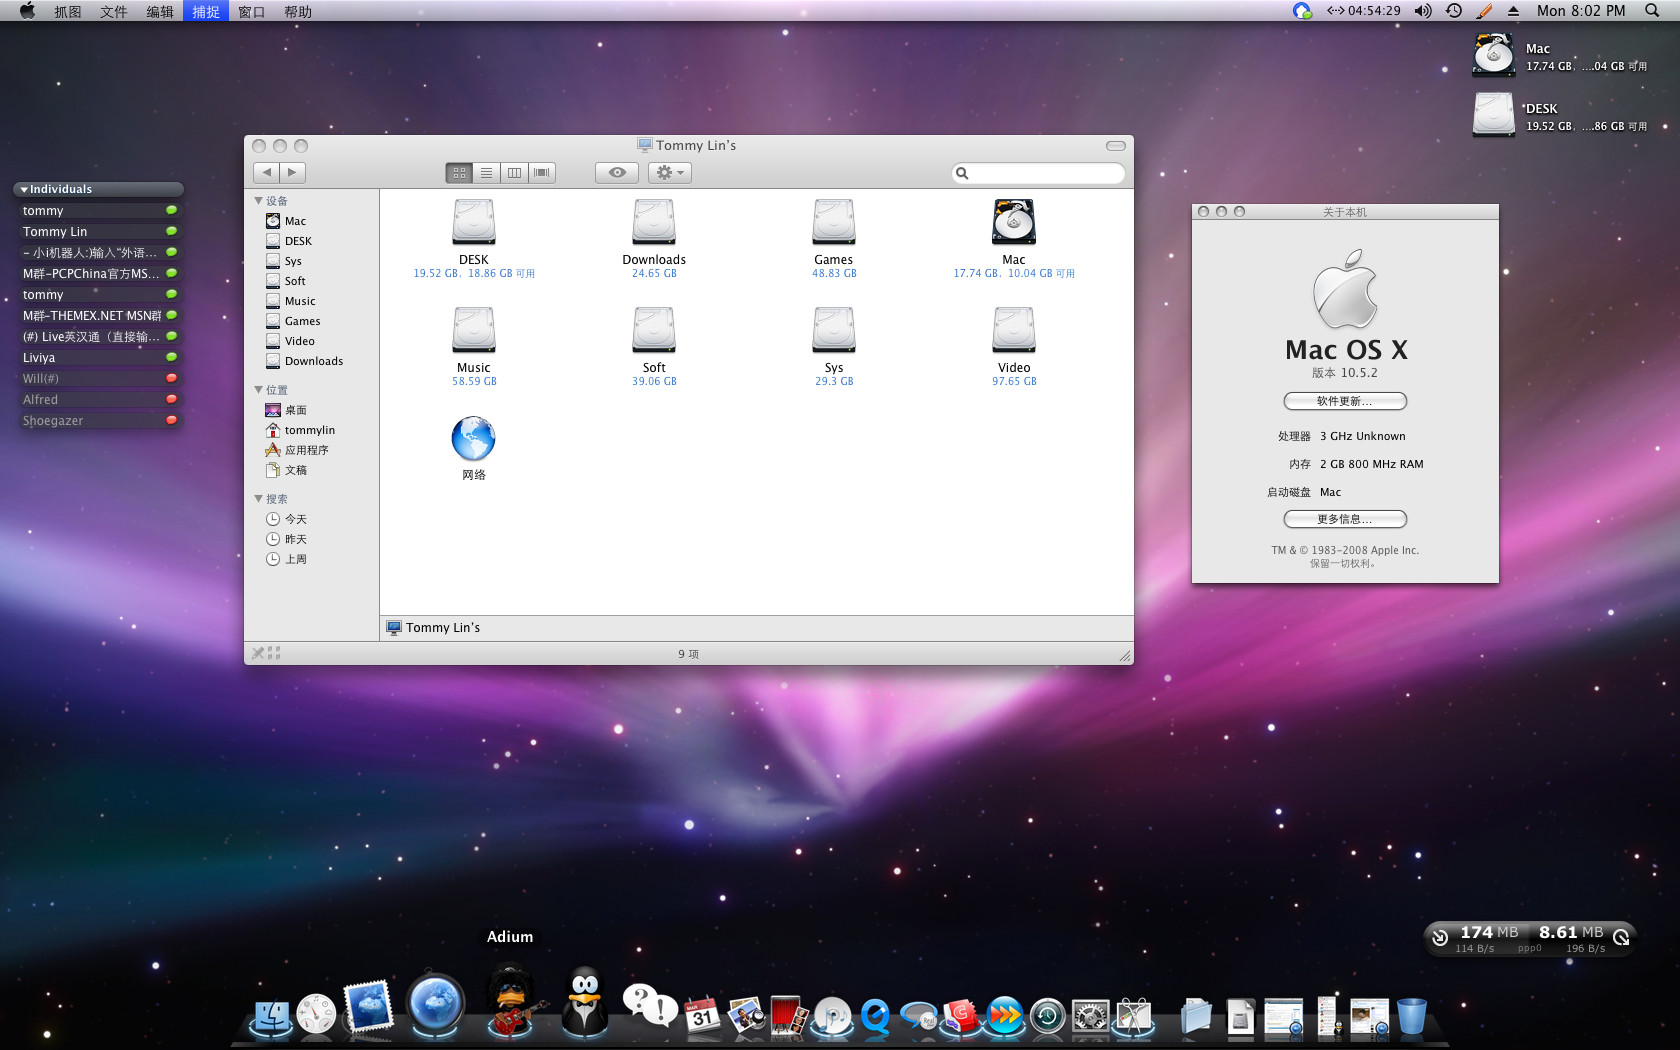 Mac 10.8 update download